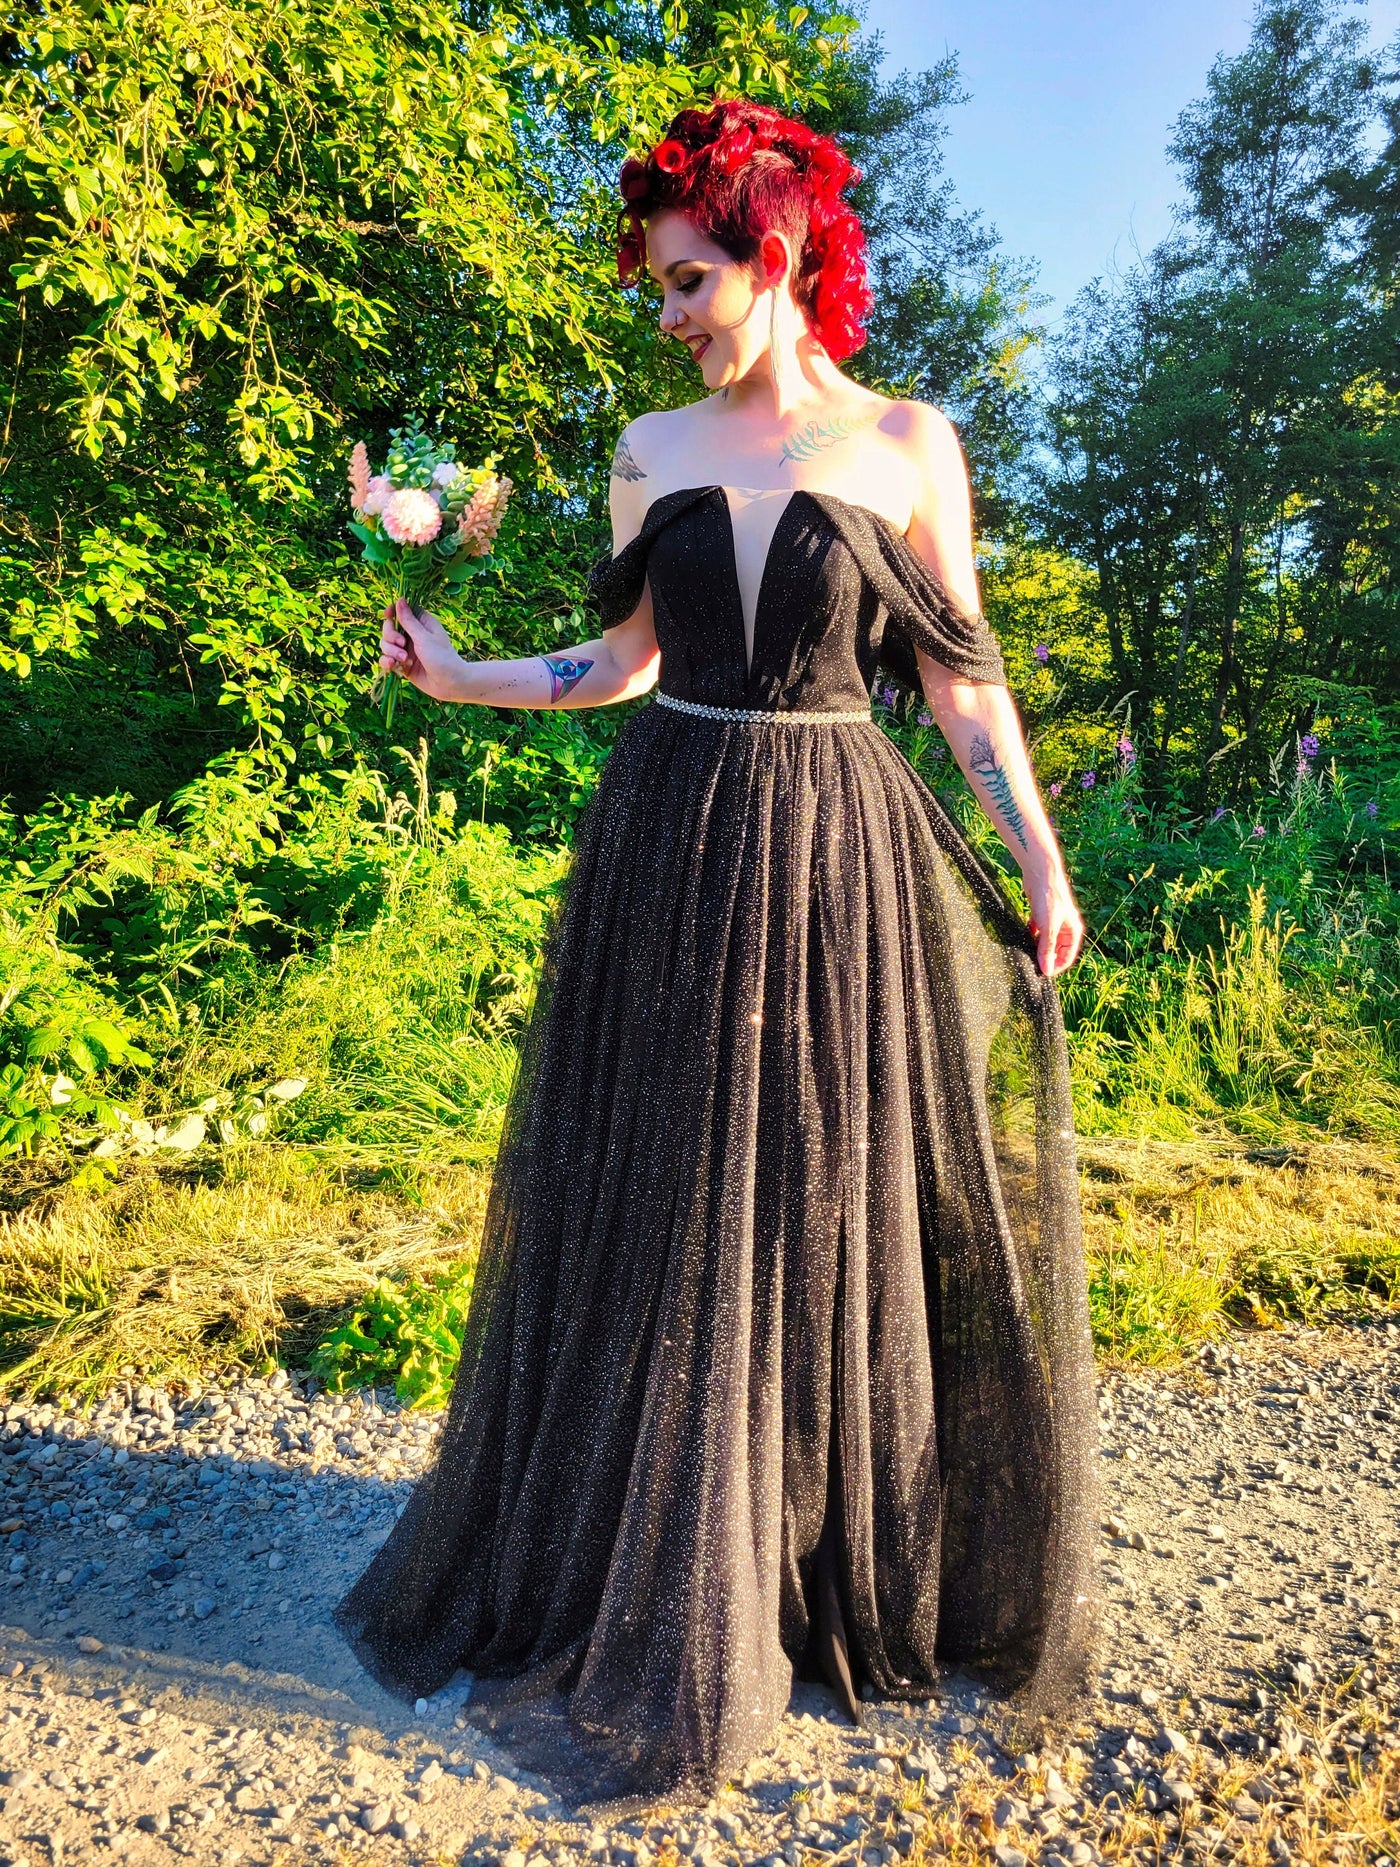 Black Red Sparkle Mermaid Gown Gothic Wedding Dress Bridal